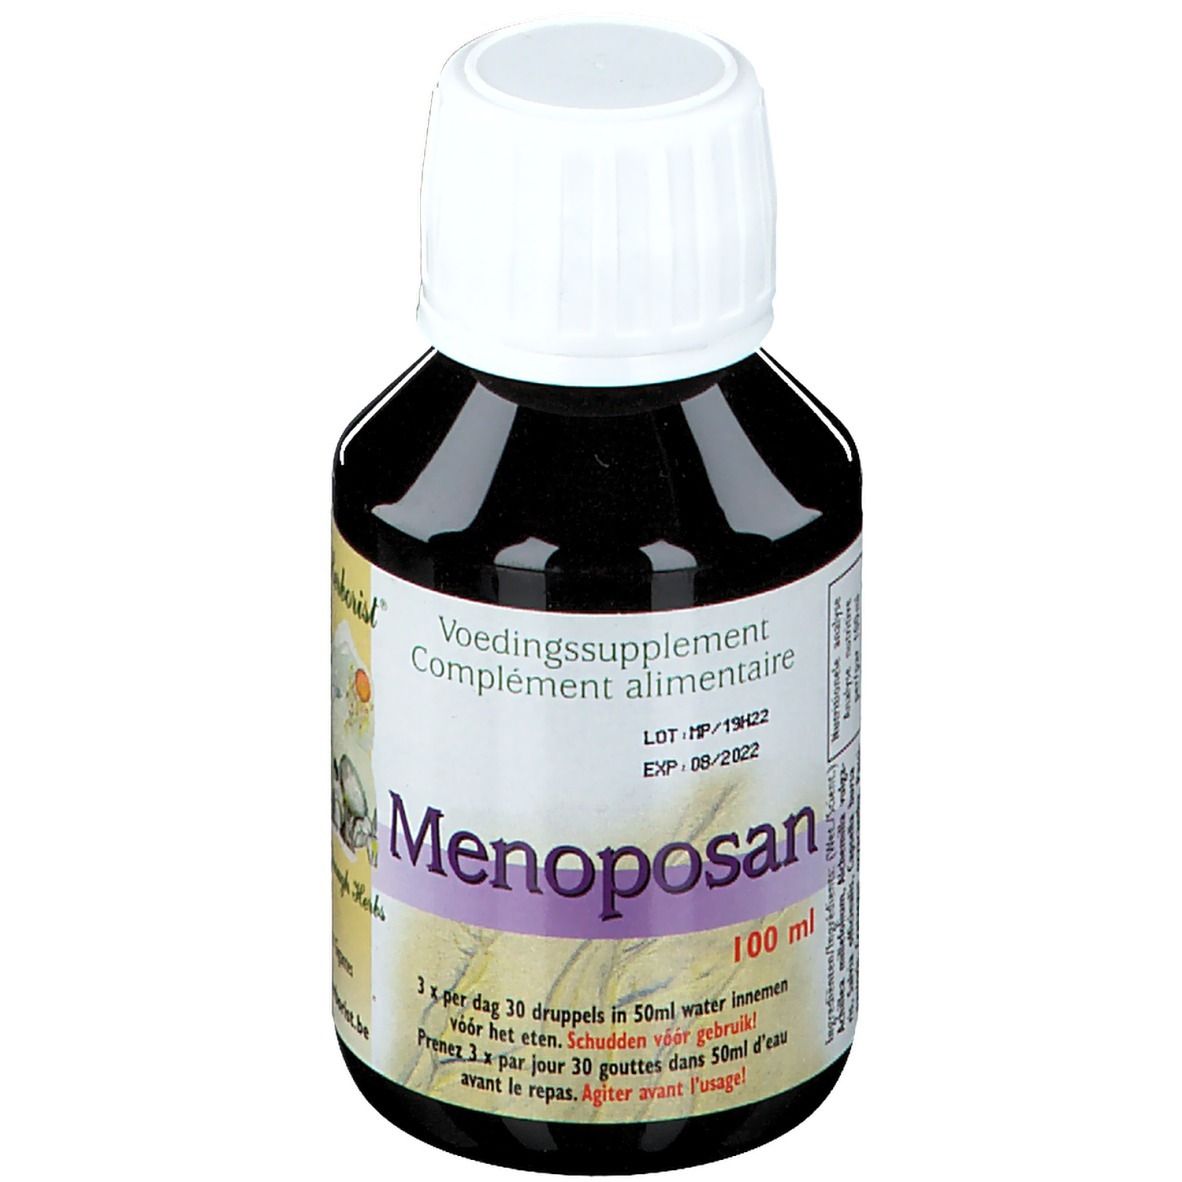 The Herborist® Menoposan